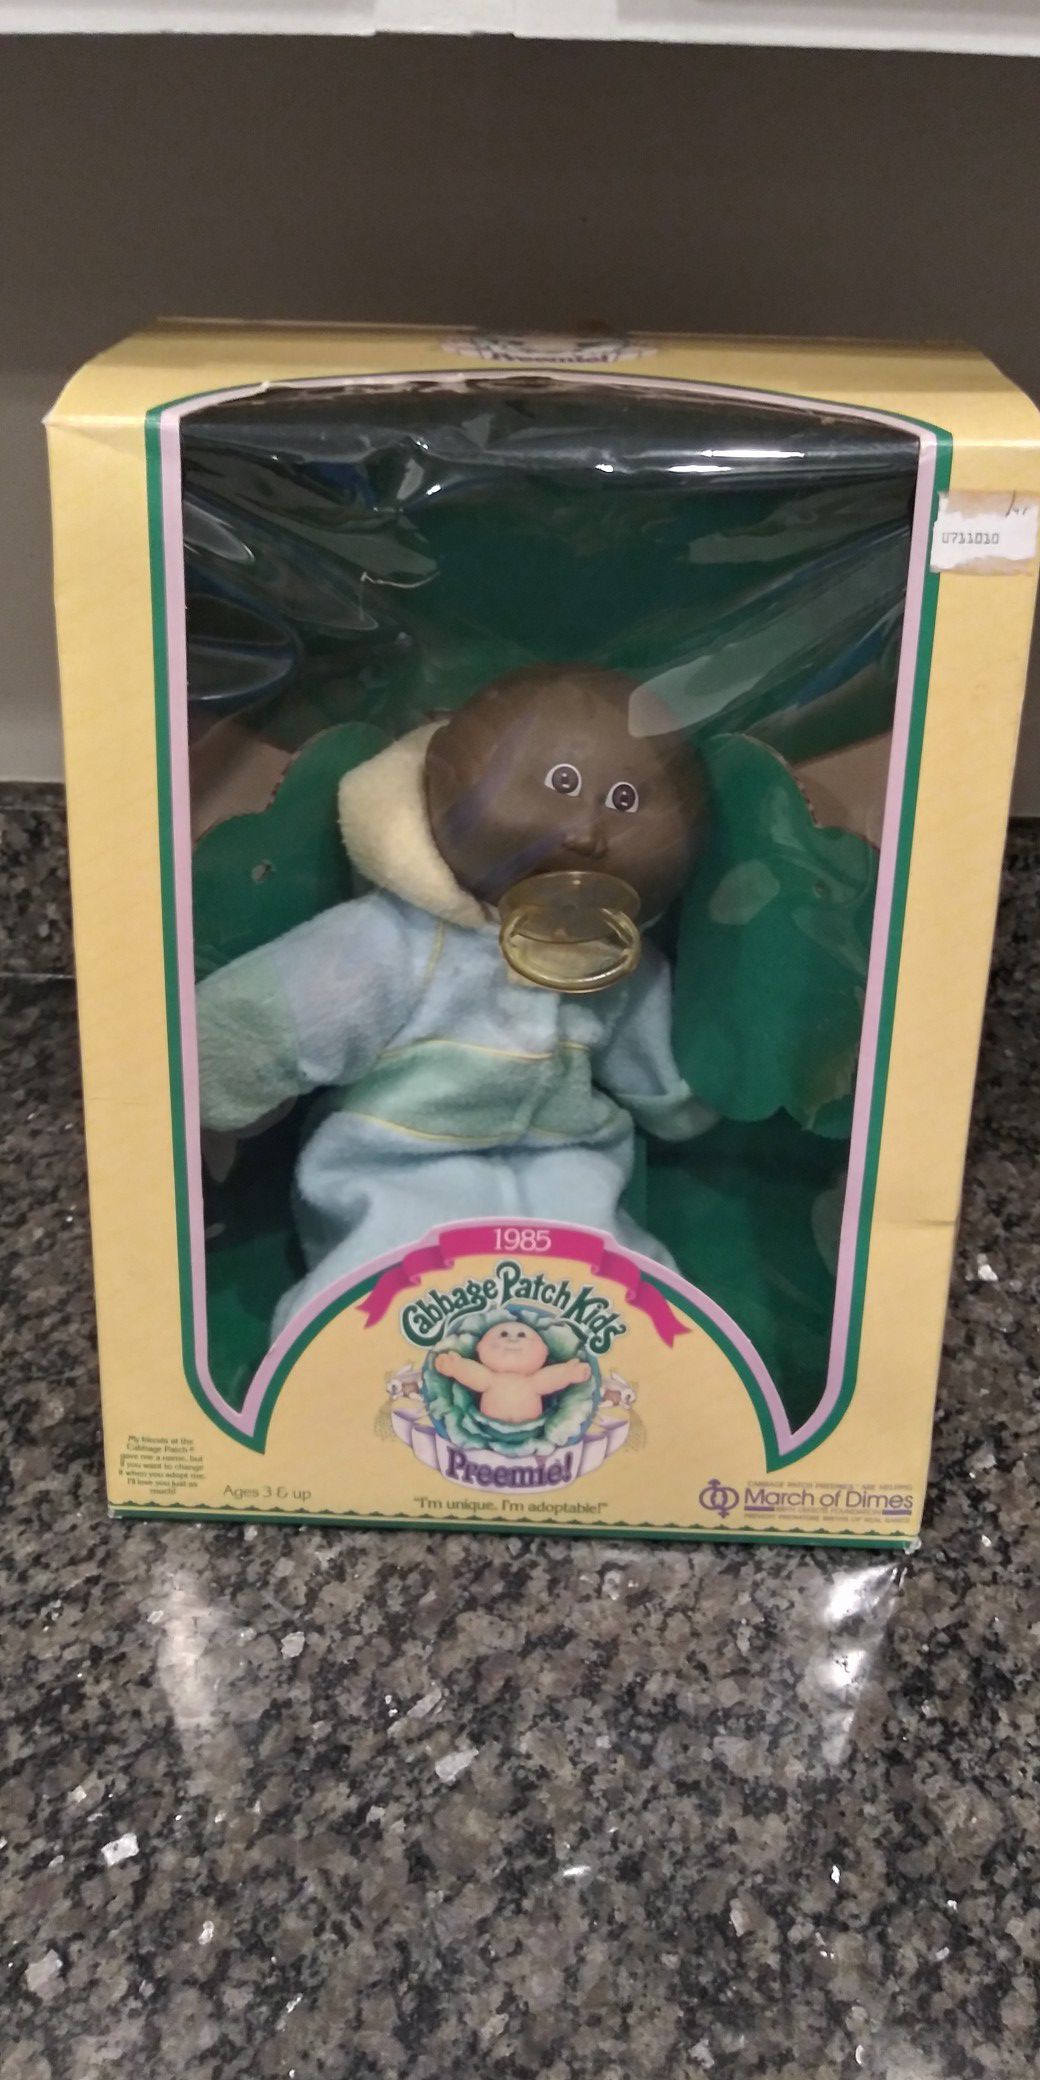 Cabbage Patch Kids 1985 Premie doll